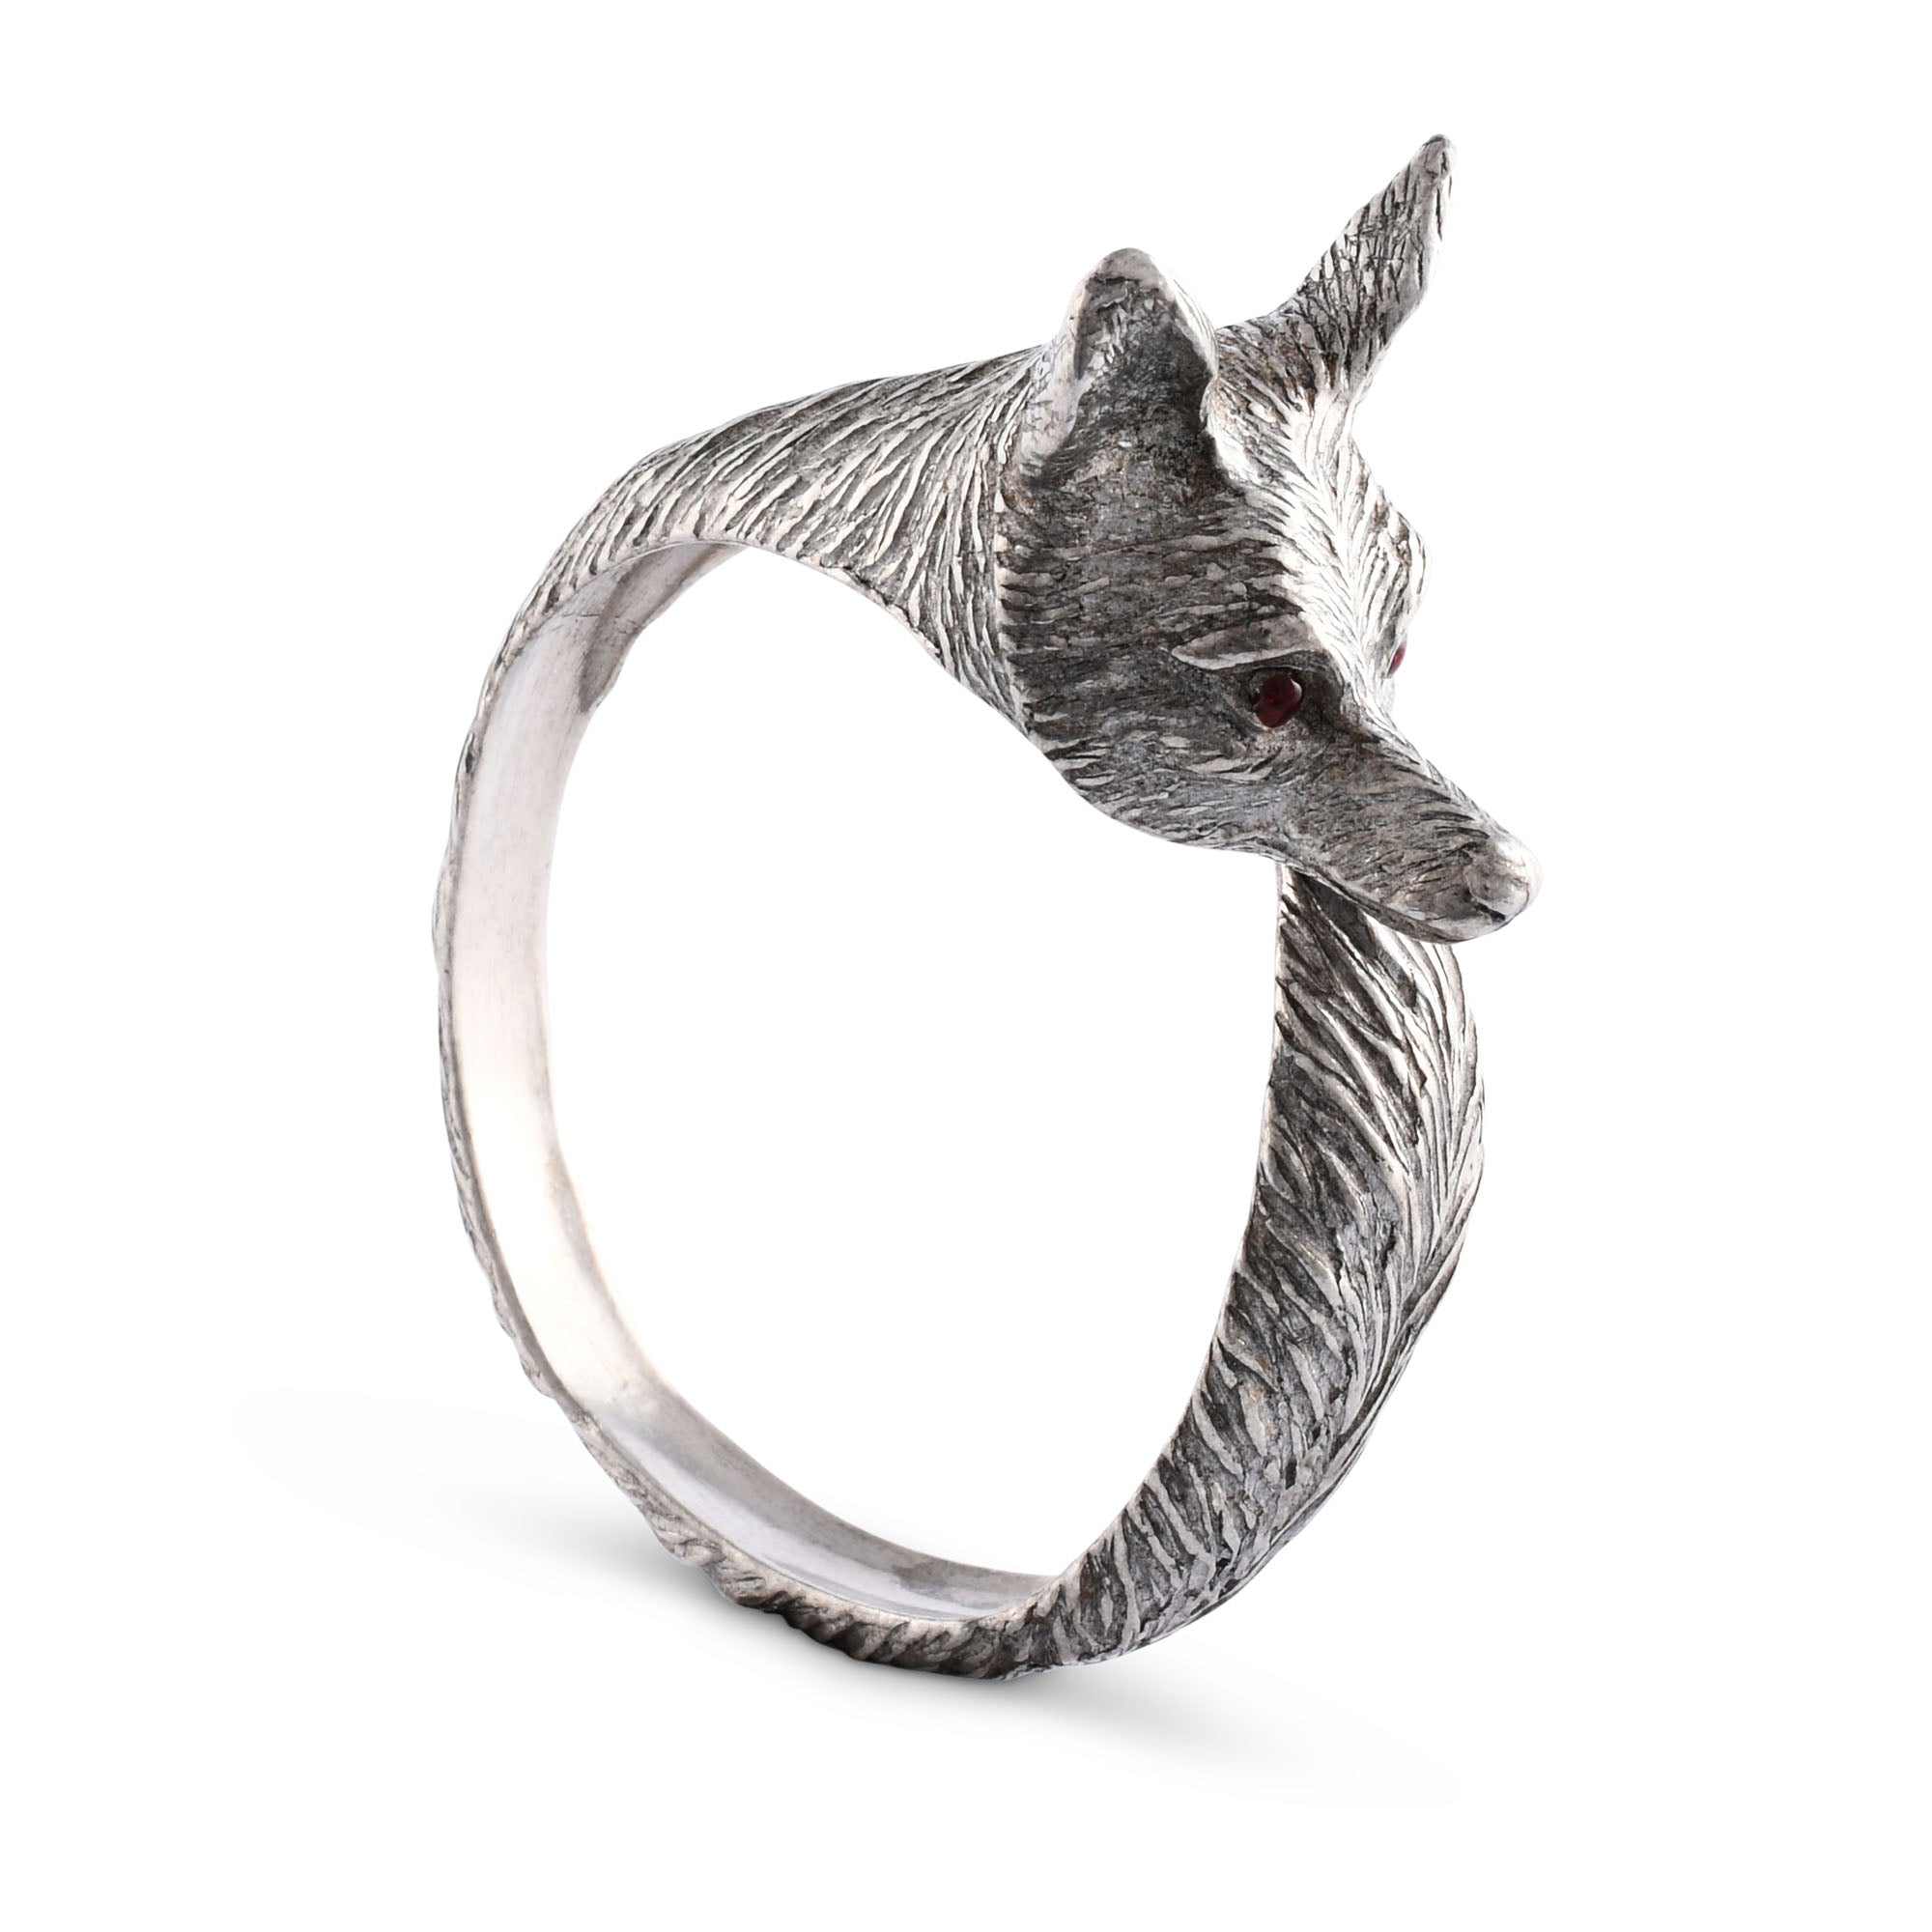 Vagabond House Pewter Fox Napkin Ring Product Image